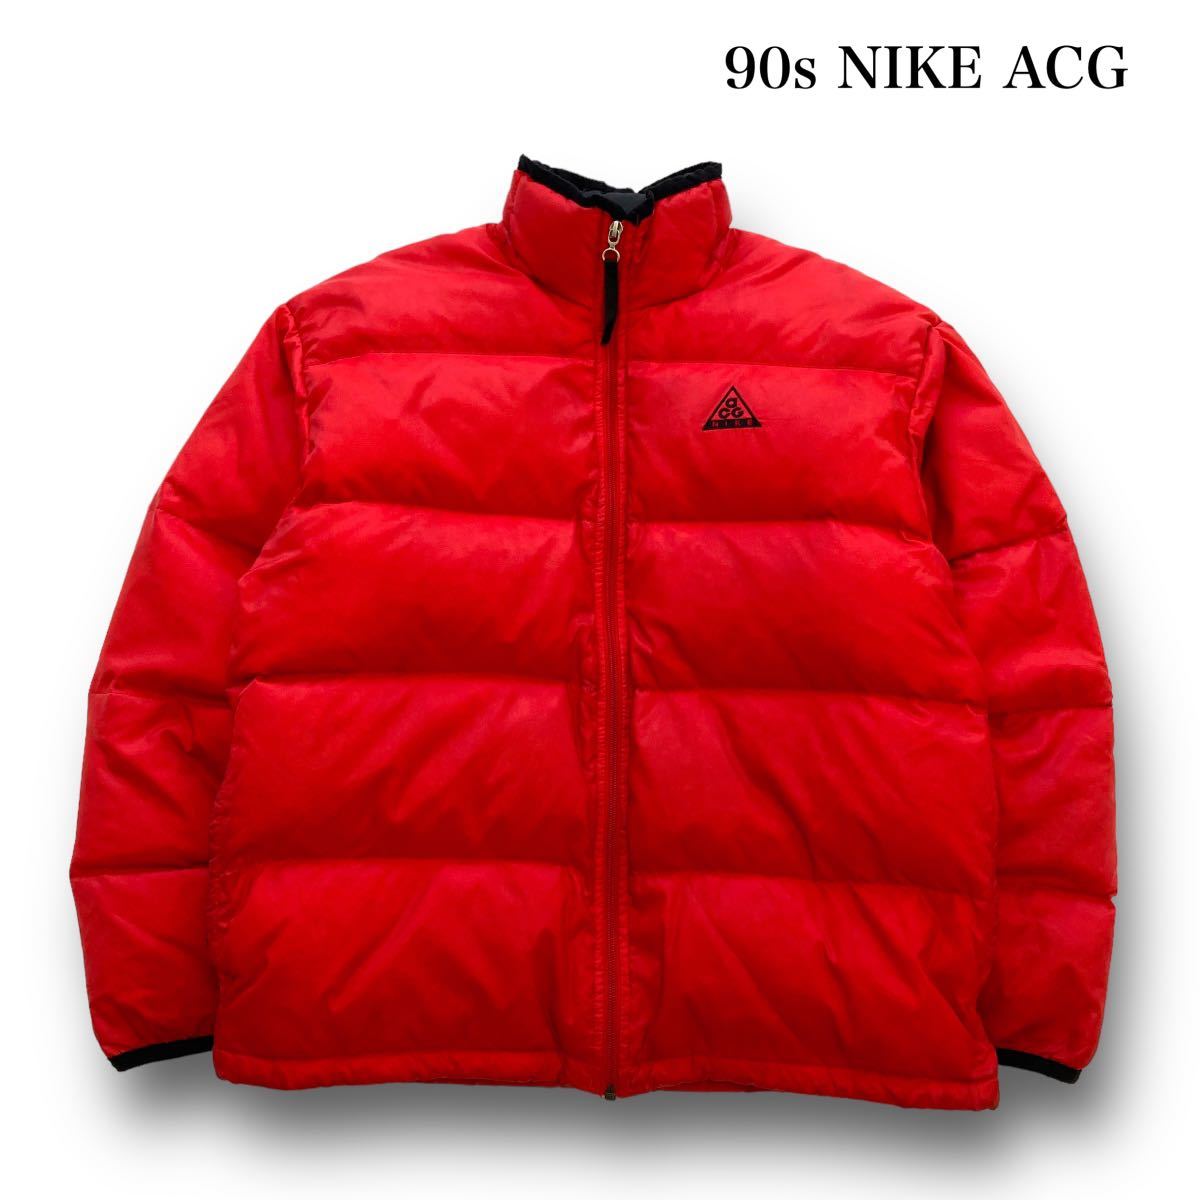 【NIKE ACG】ナイキエーシージー 90sダウンジャケット ヴィンテージ古着 90年代 ワンポイント刺繍ロゴ 赤 レッド ブルゾン nike  acg (L)